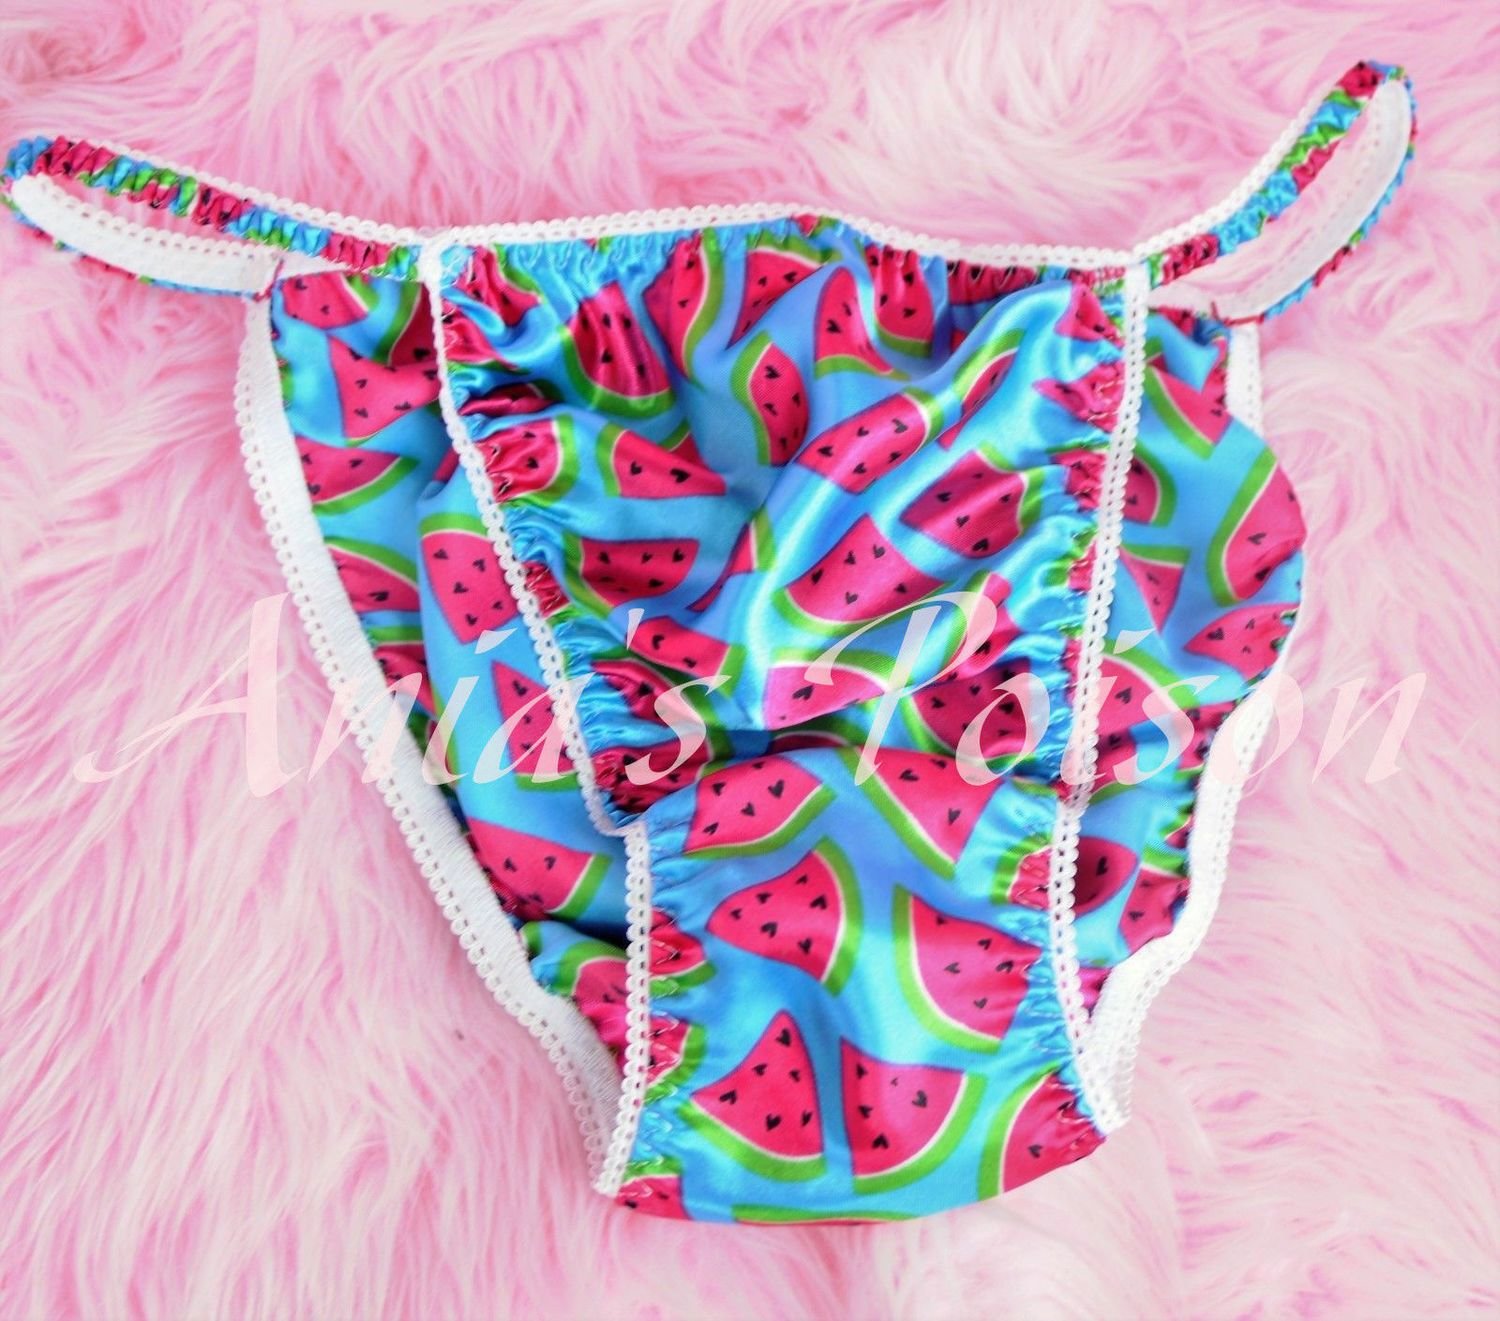 Ania's Poison MANties S - XXL Watermelon Novelty Prints Super Rare 100% polyester string bikini sissy mens underwear panties